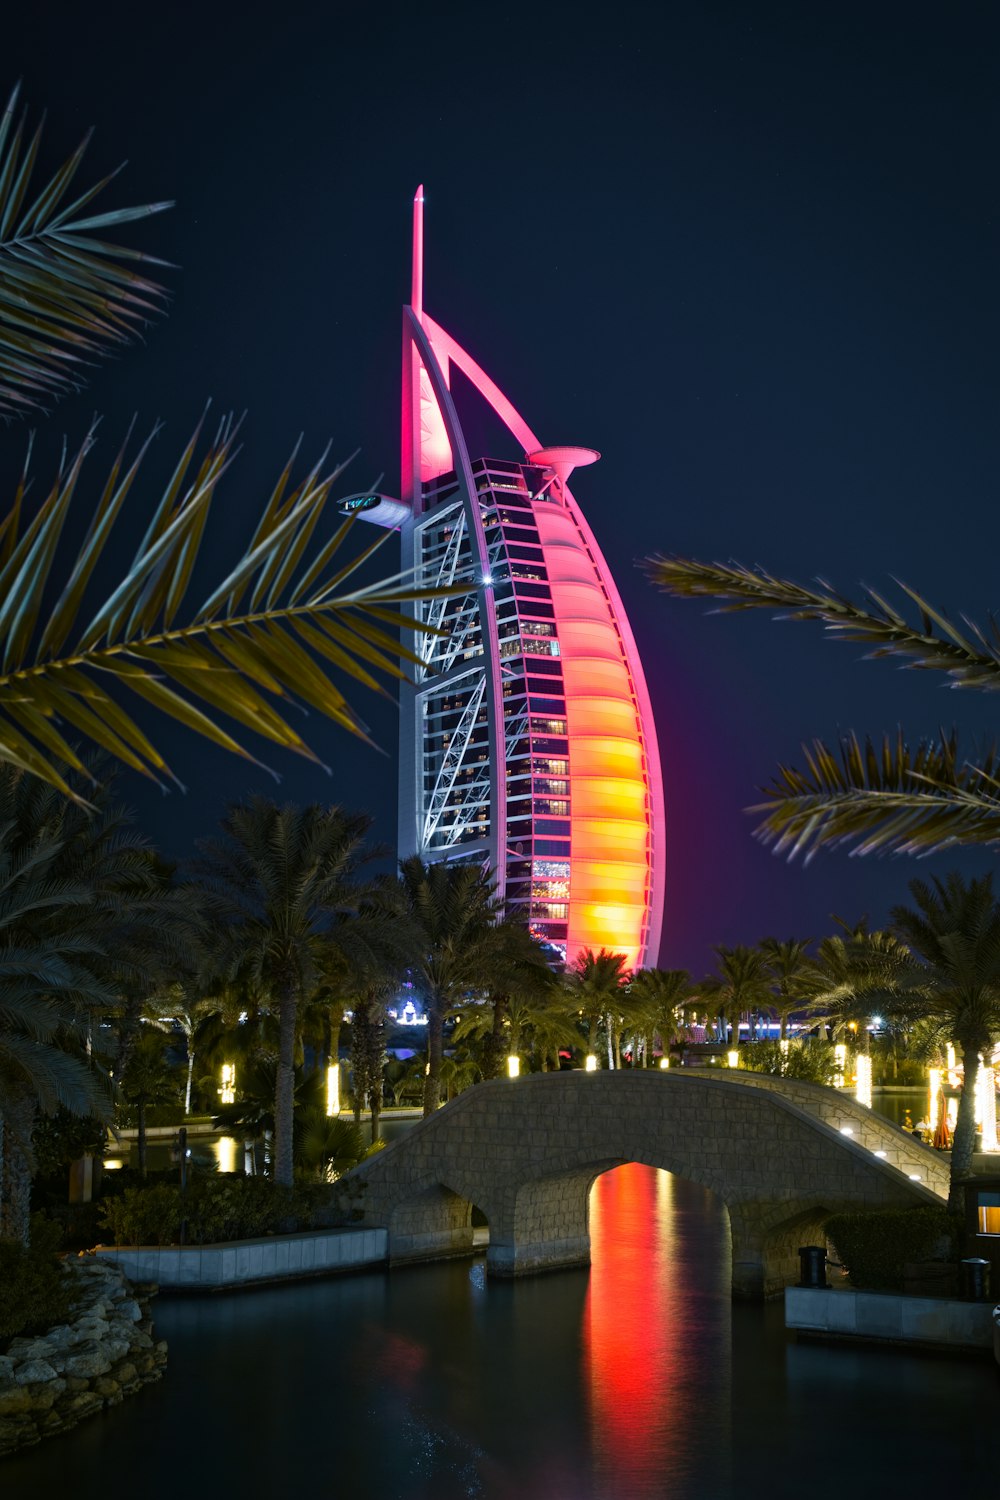 Burj Al-Arab Hotel during nighttime